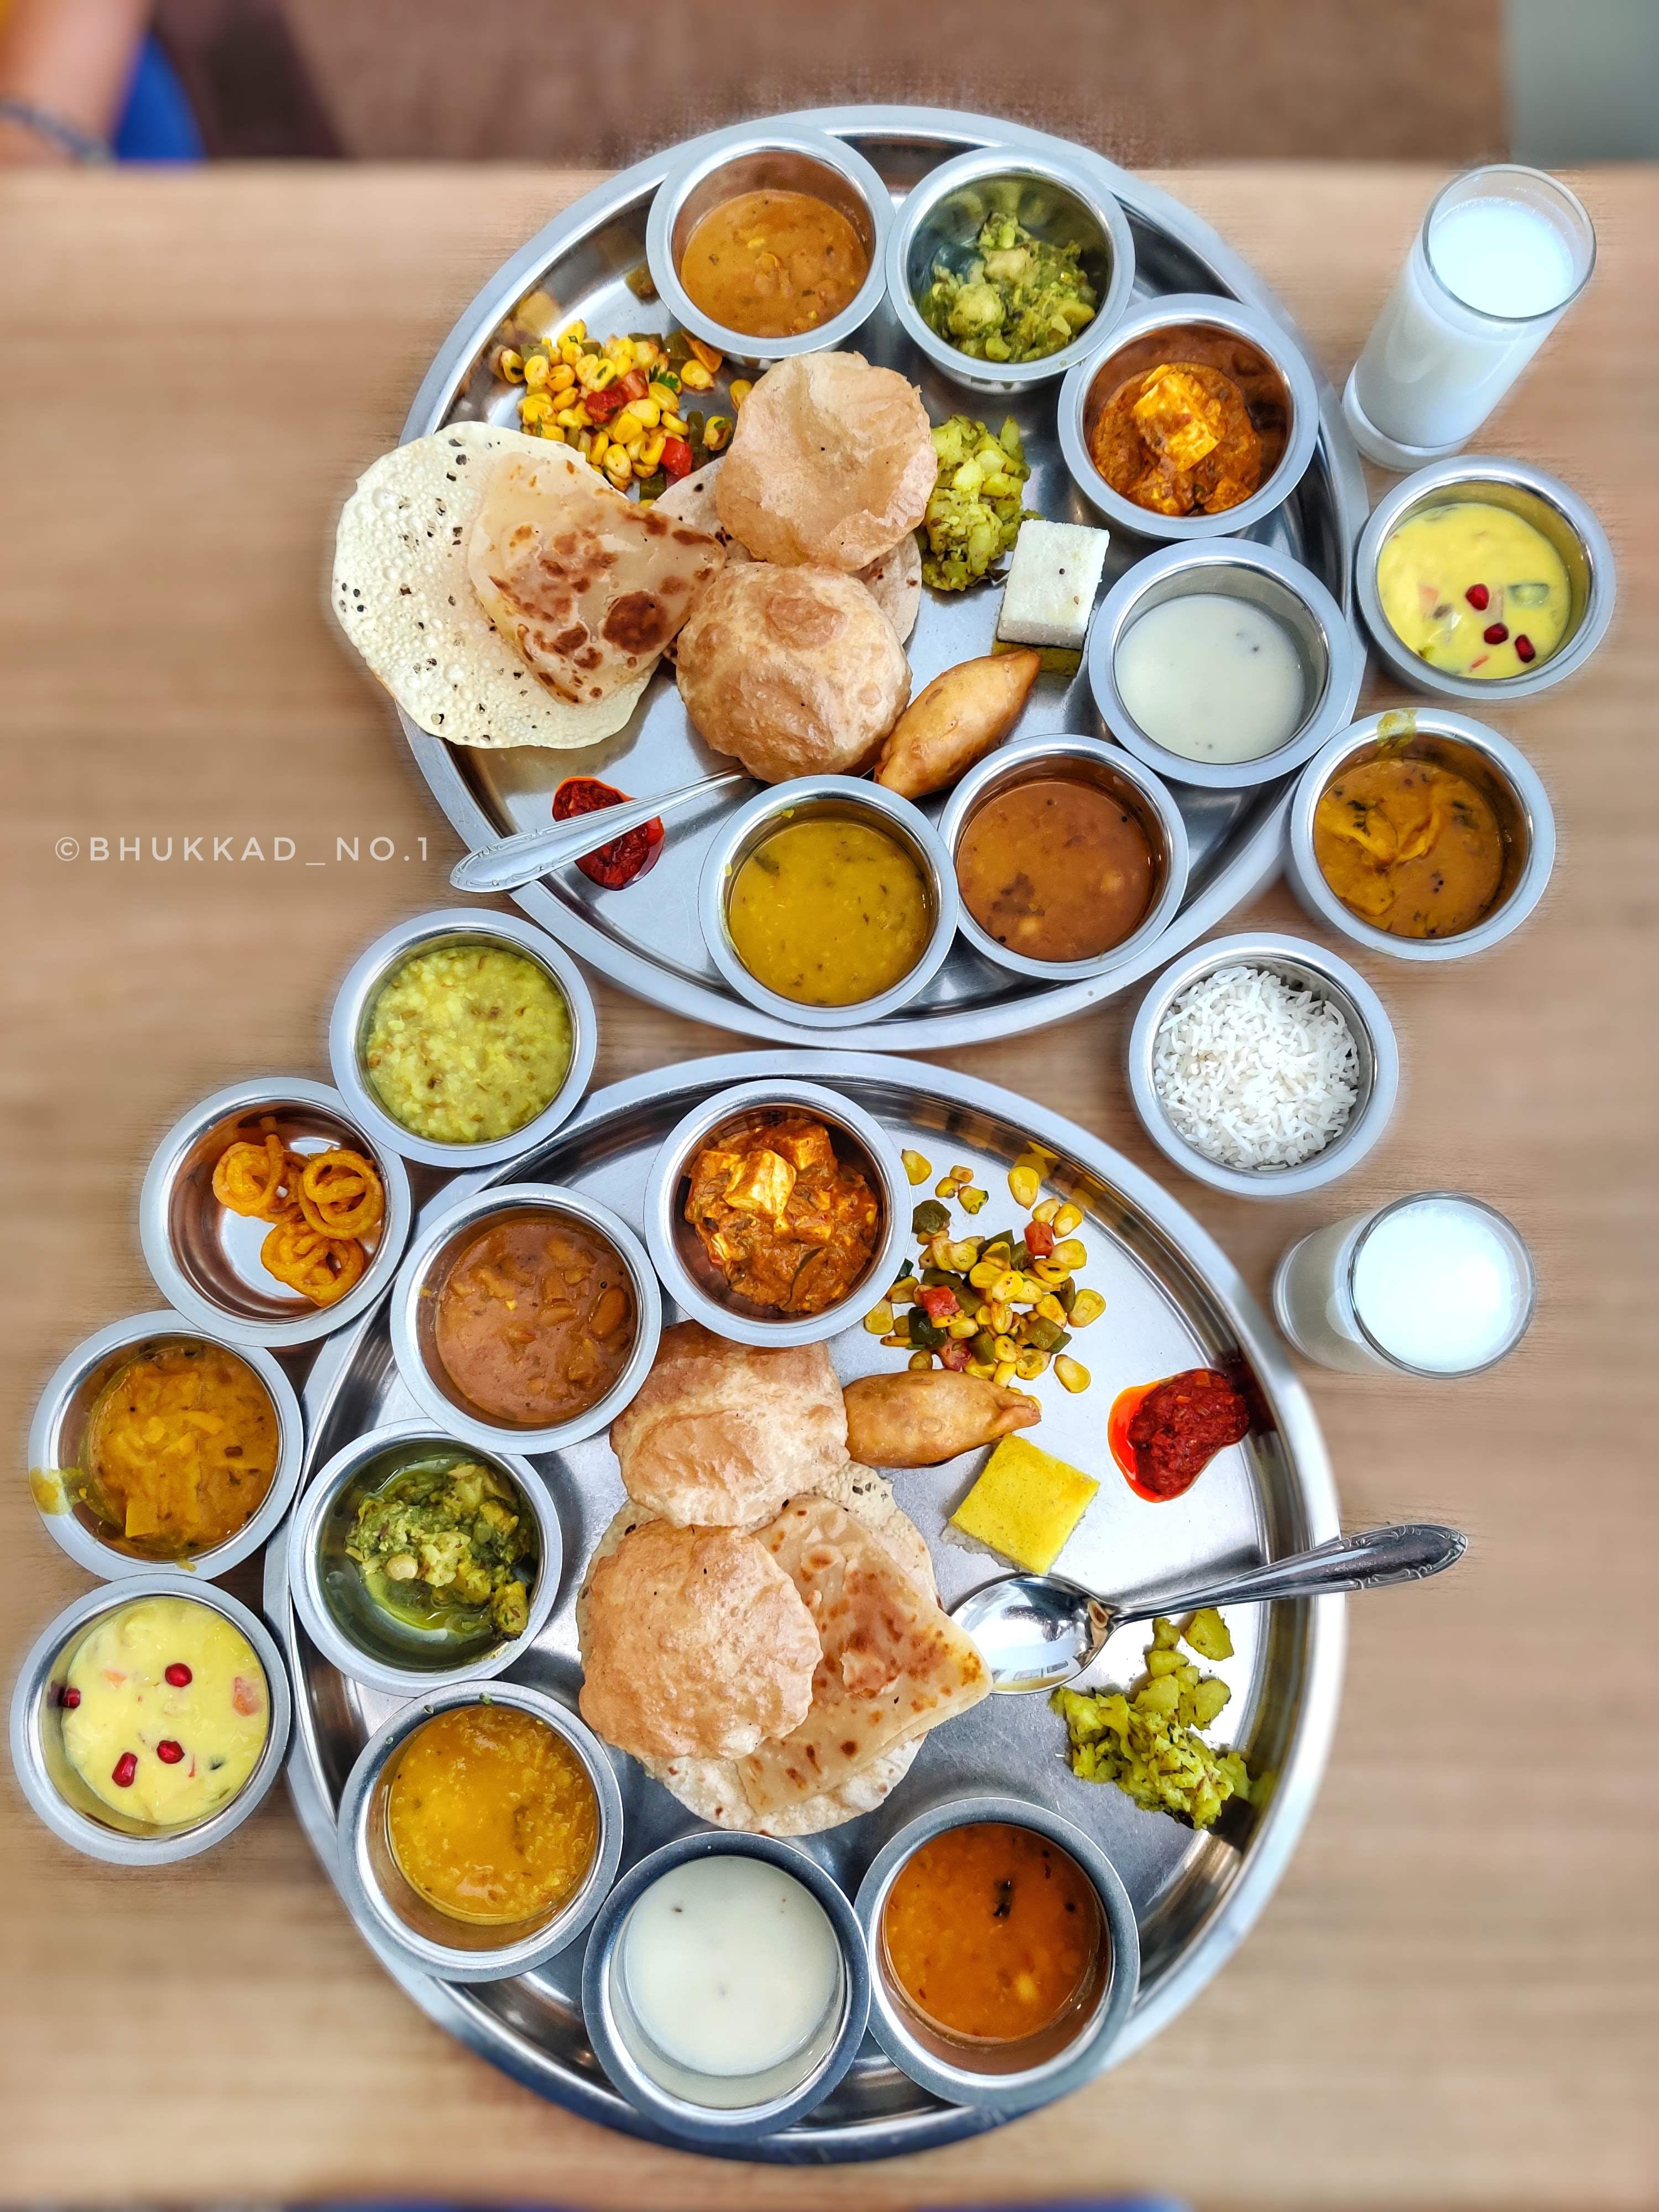 Dish,Food,Cuisine,Meal,Ingredient,Brunch,Produce,Breakfast,Indian cuisine,Rajasthani cuisine